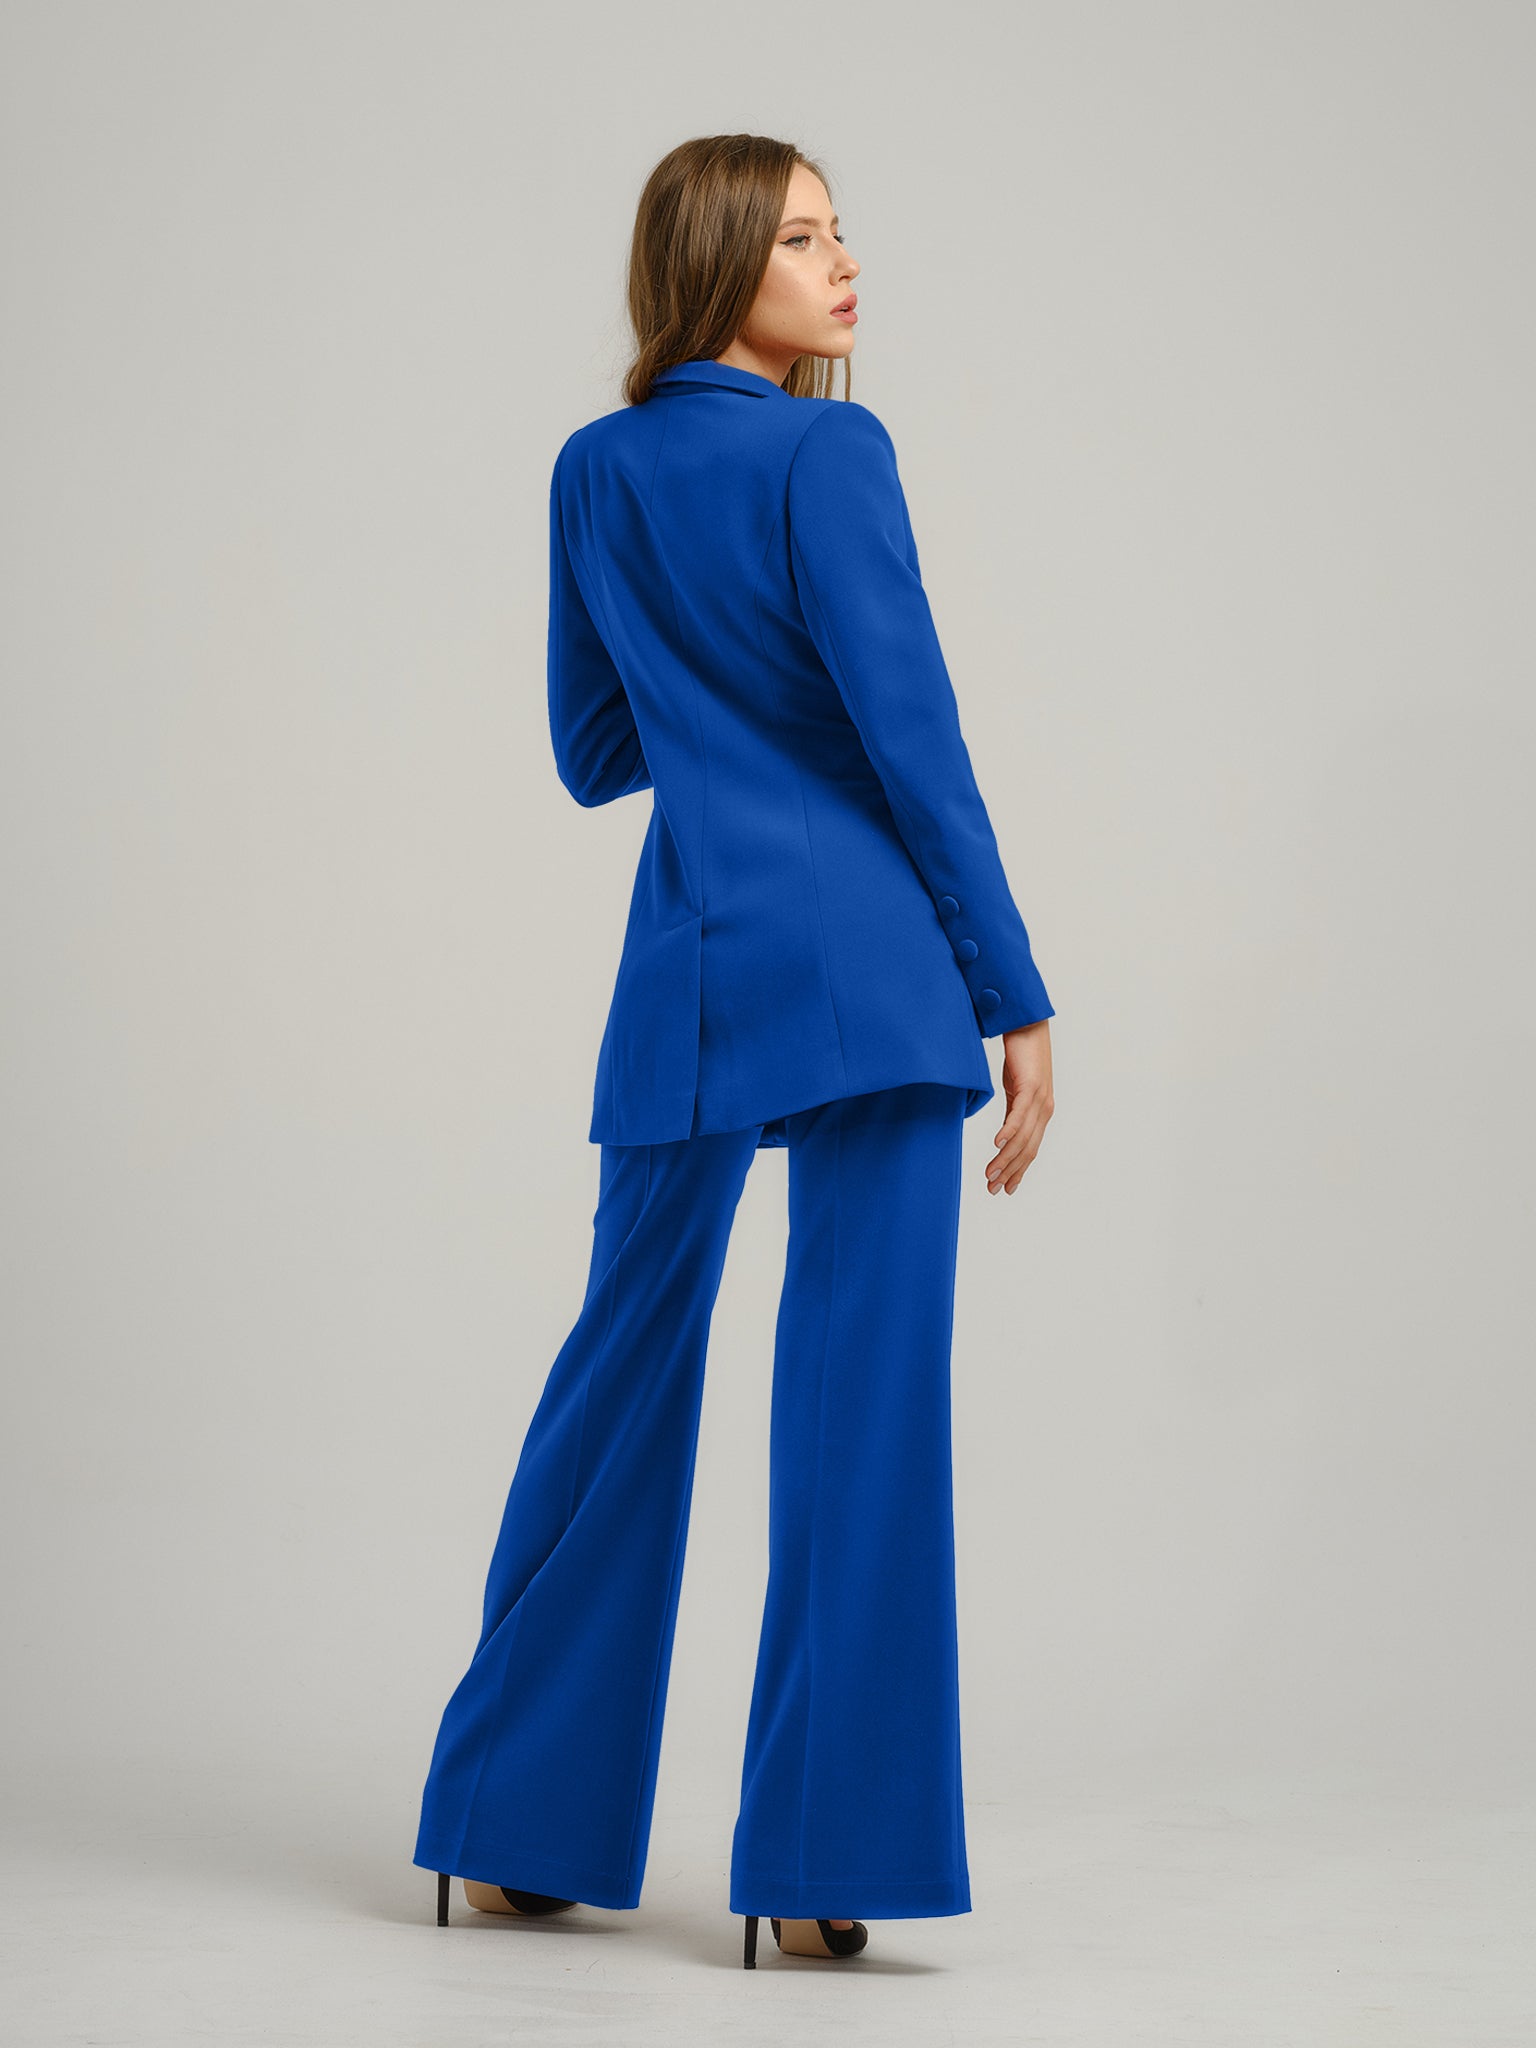 Royal Azure Timeless Power Suit by Tia Dorraine Women's Luxury Fashion Designer Clothing Brand